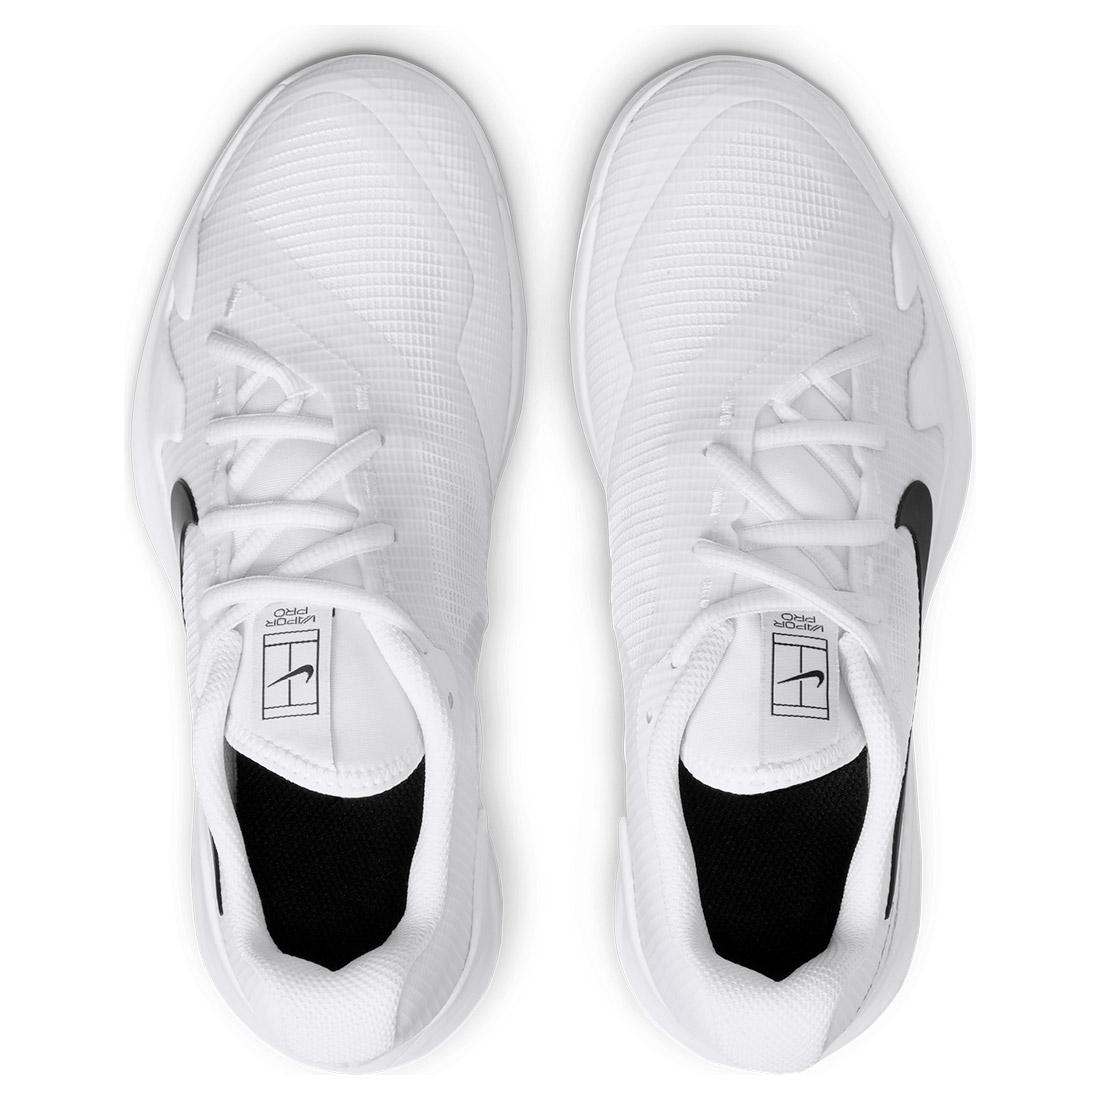 NikeCourt Junior`s Vapor Pro Tennis Shoes White and Black